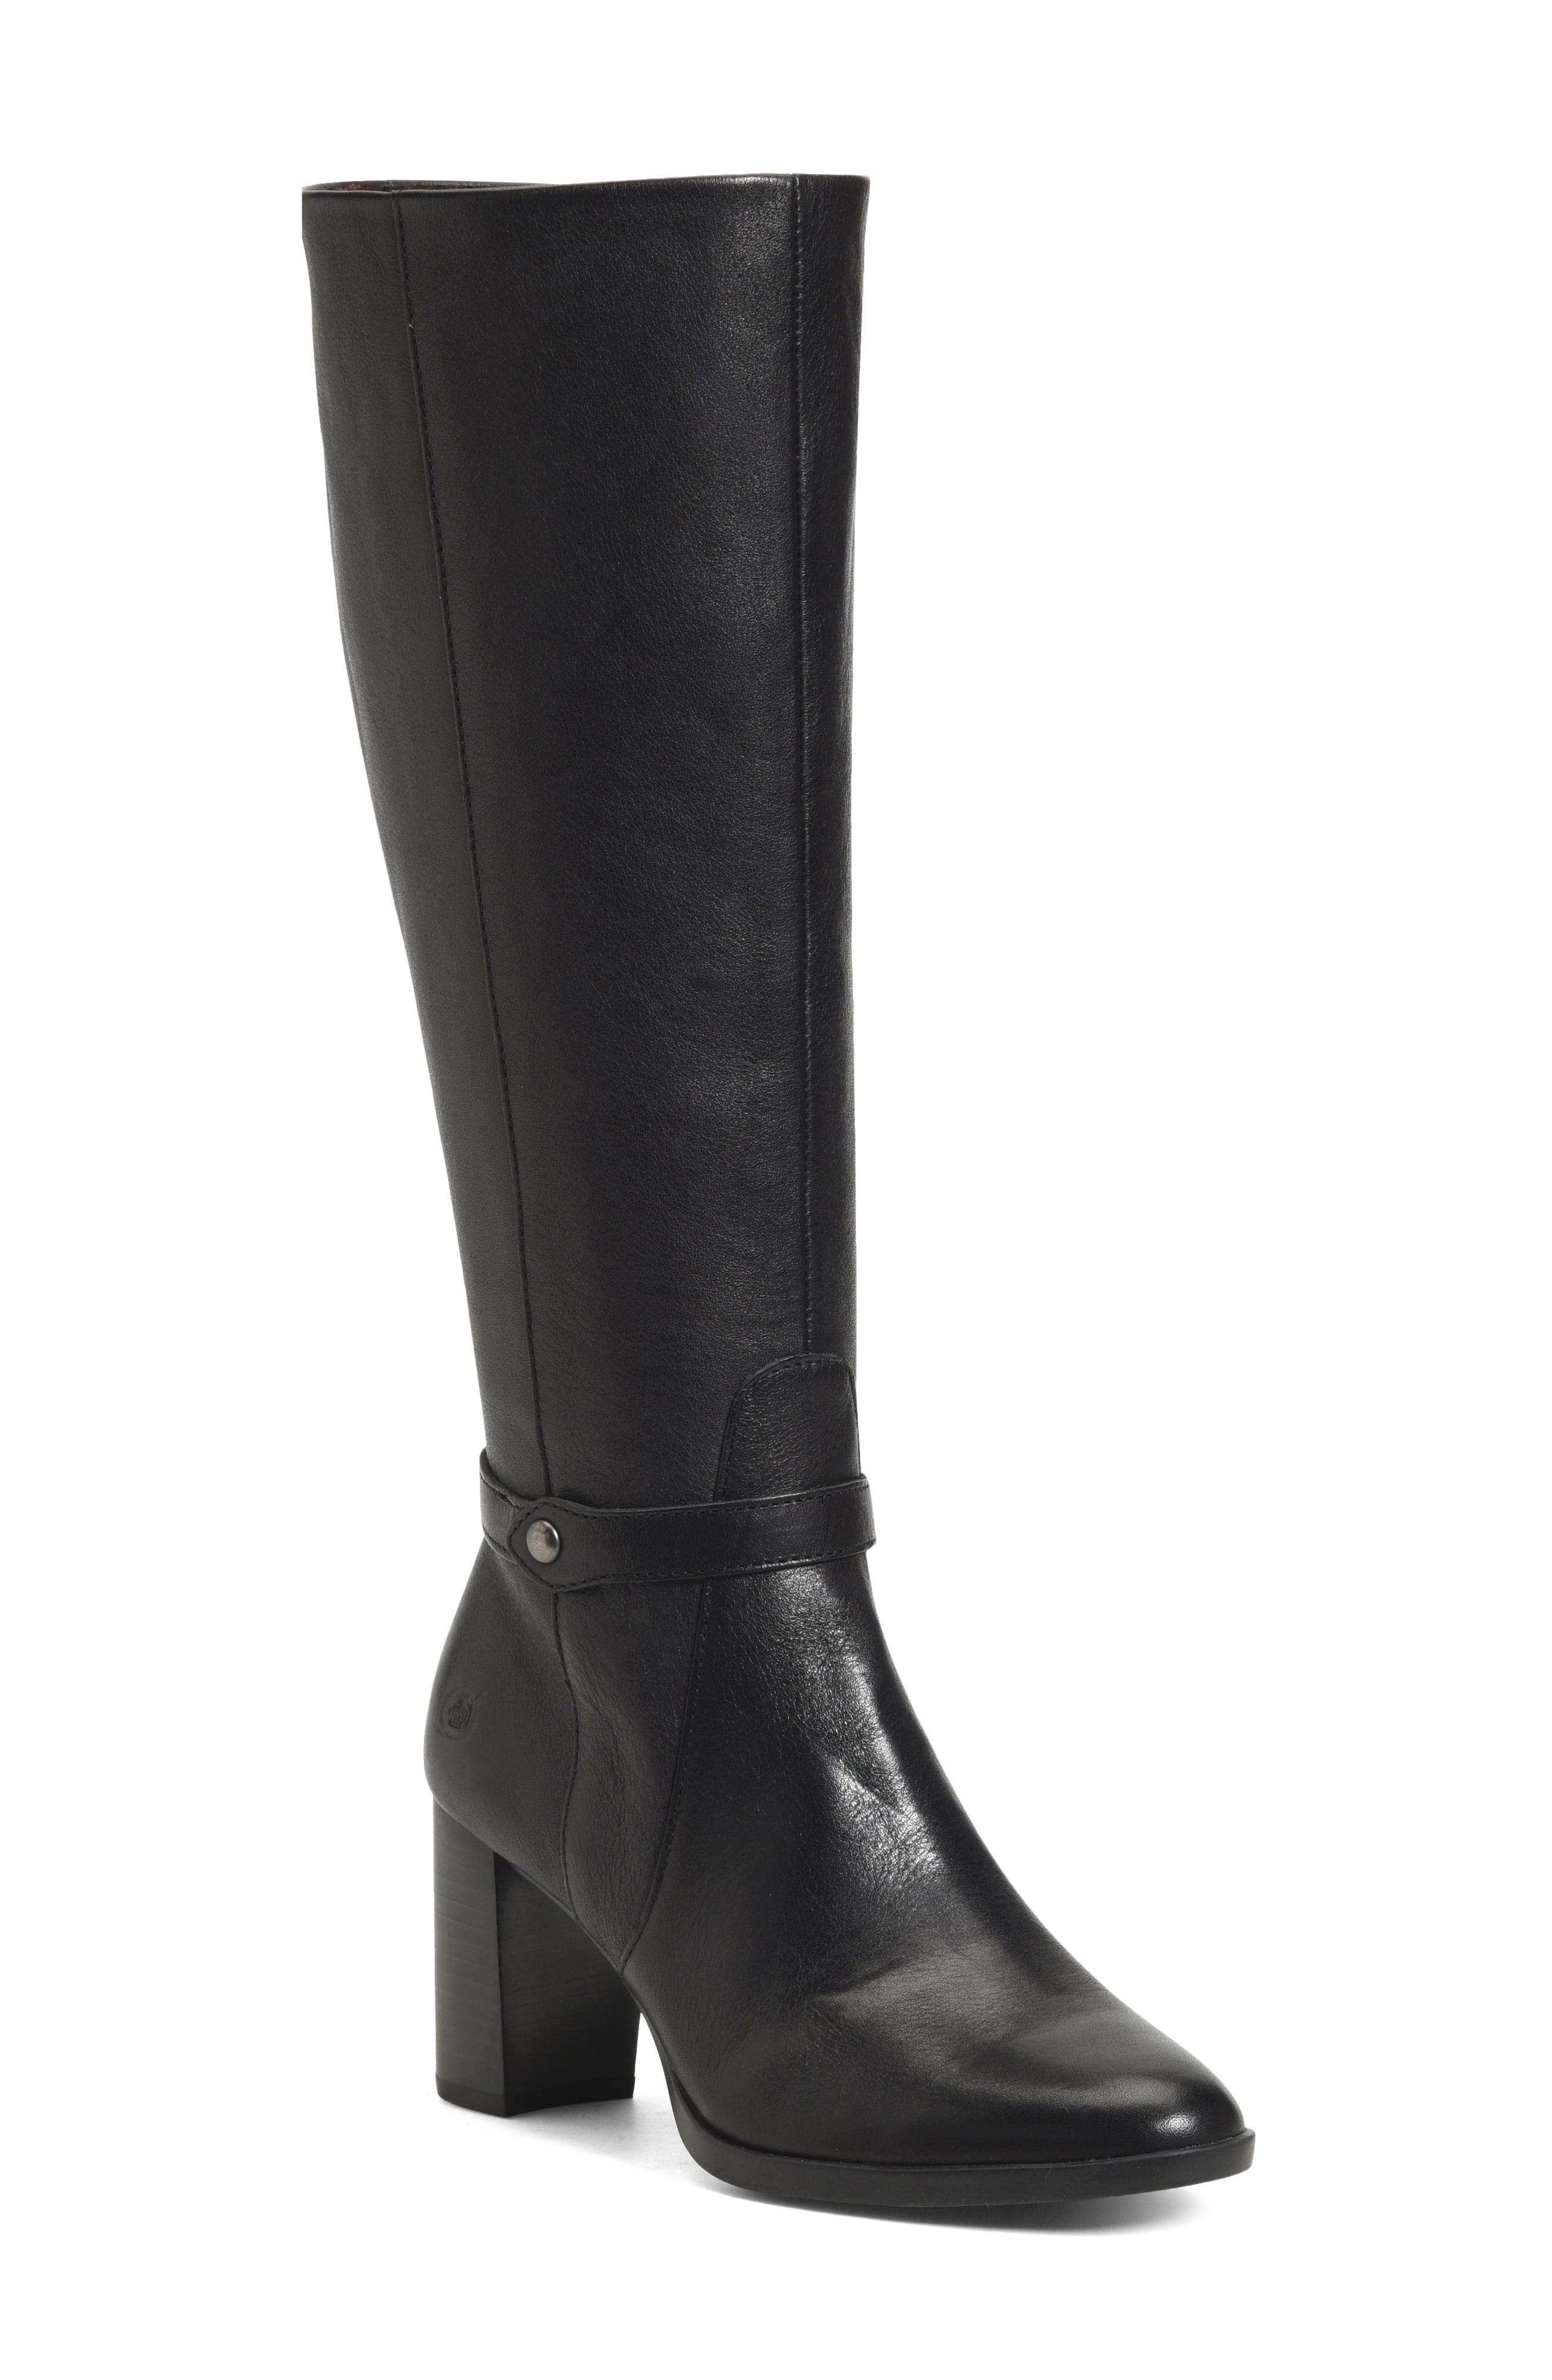 Born Leather Børn Ellendale Knee High Boot in Black Leather (Black) - Lyst